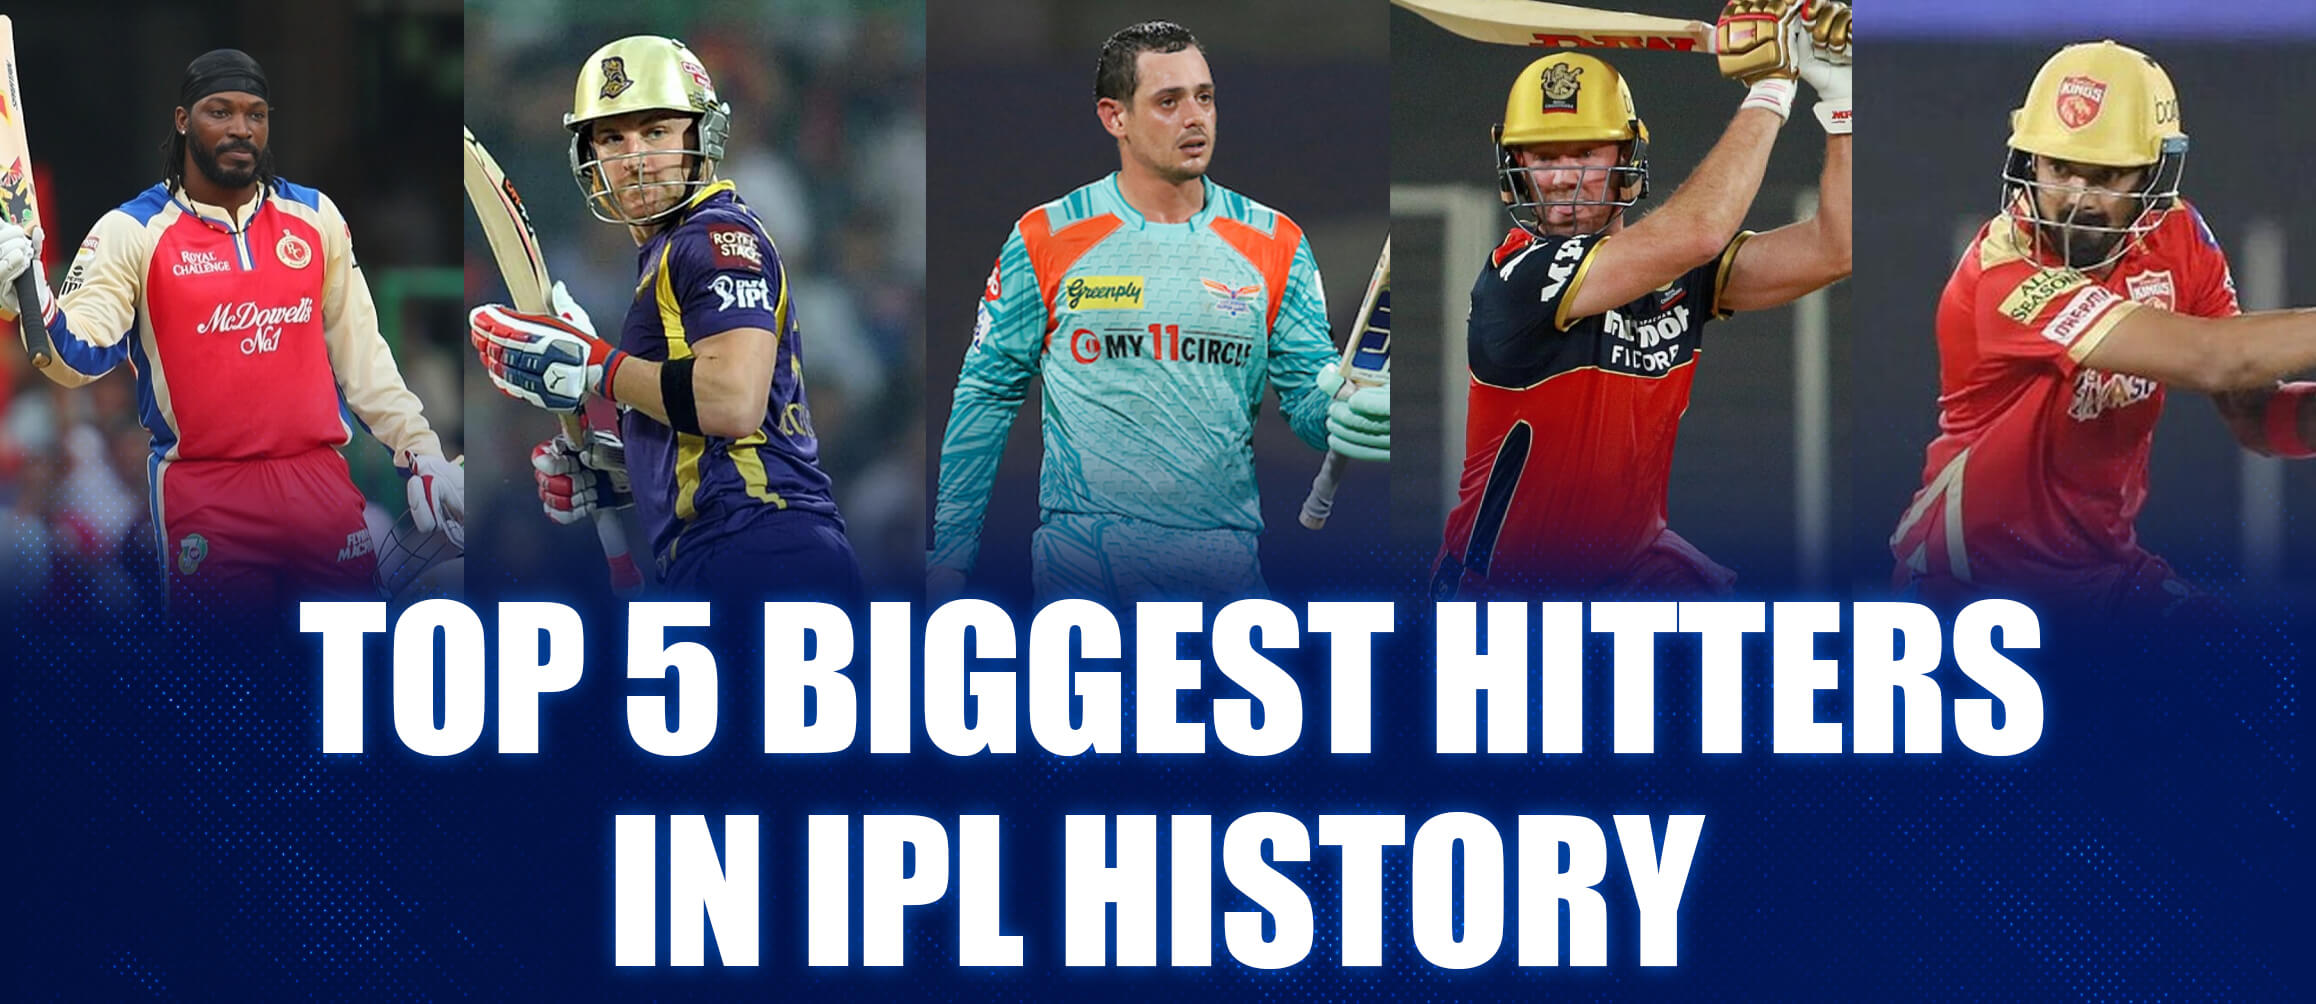 Top 5 Biggest Hitters in IPL History